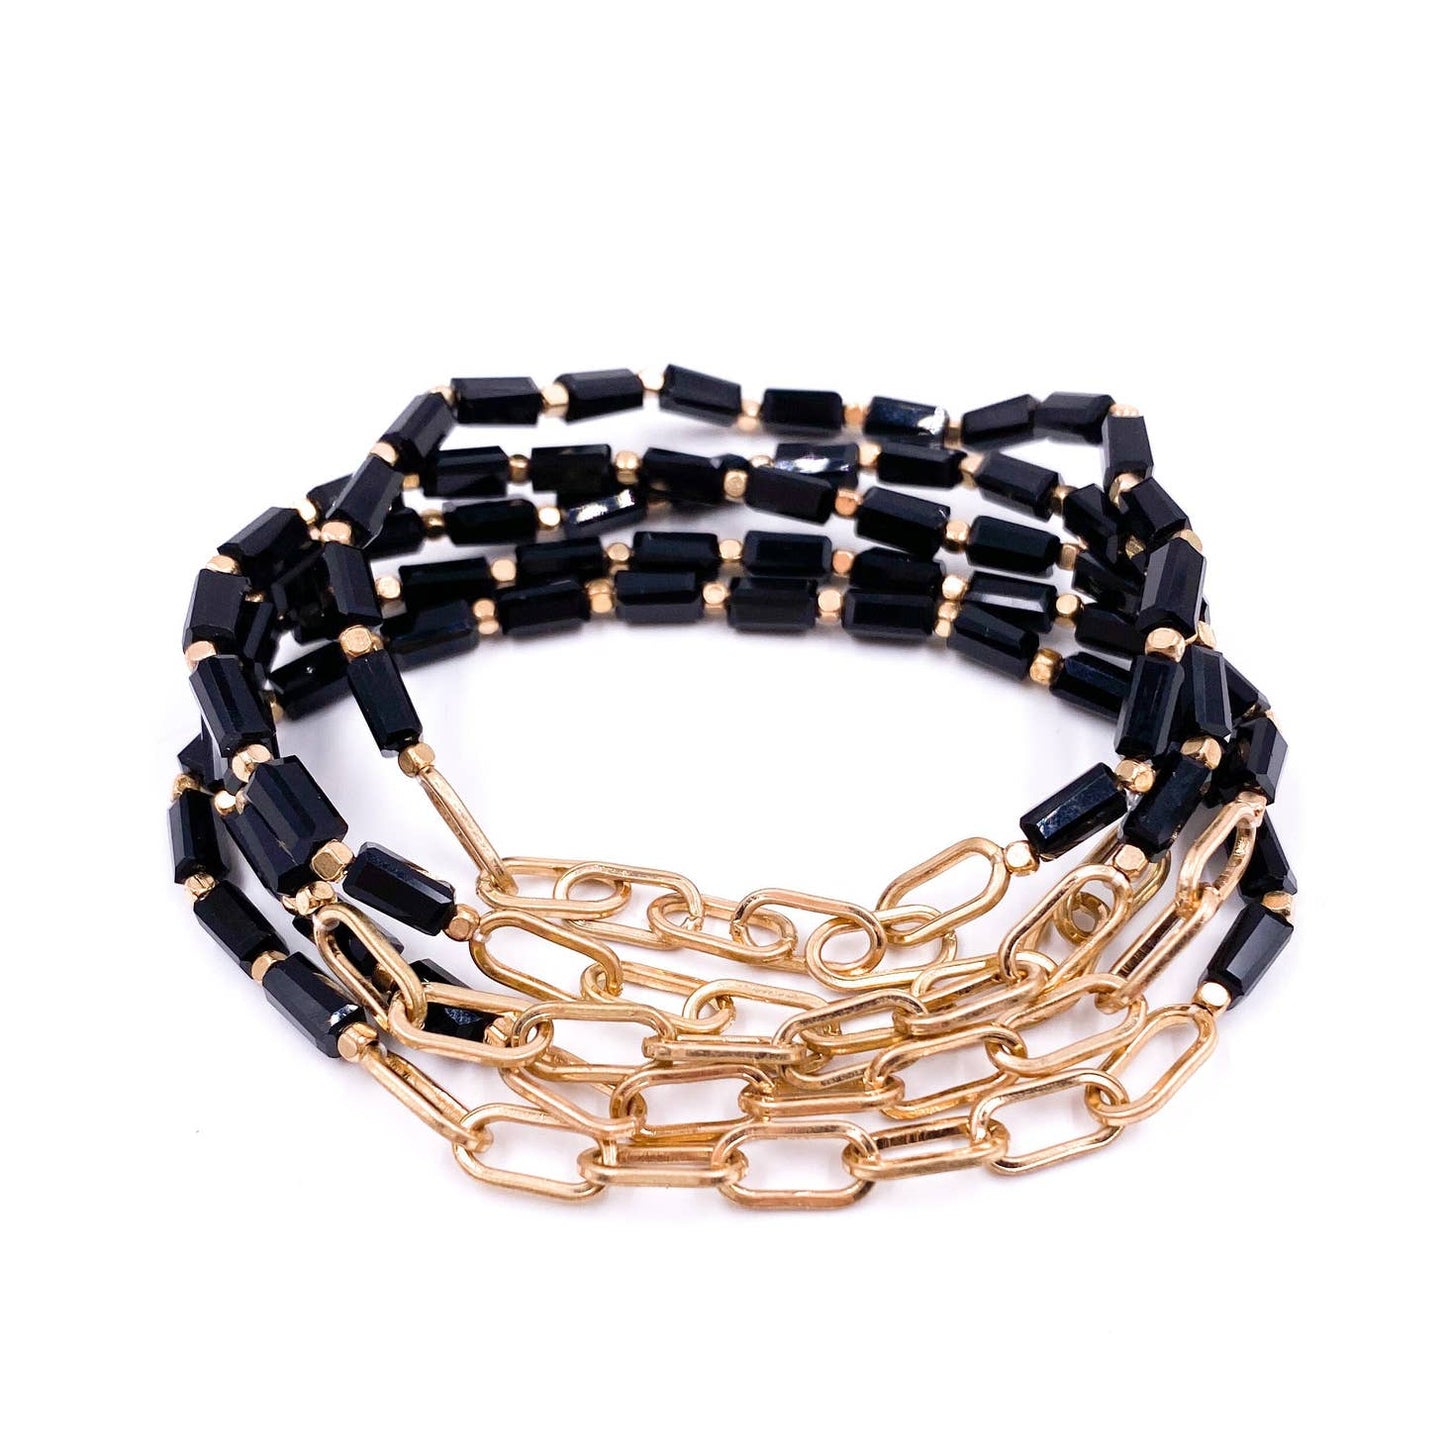 Paisley Black Beads and Link Bracelet Set